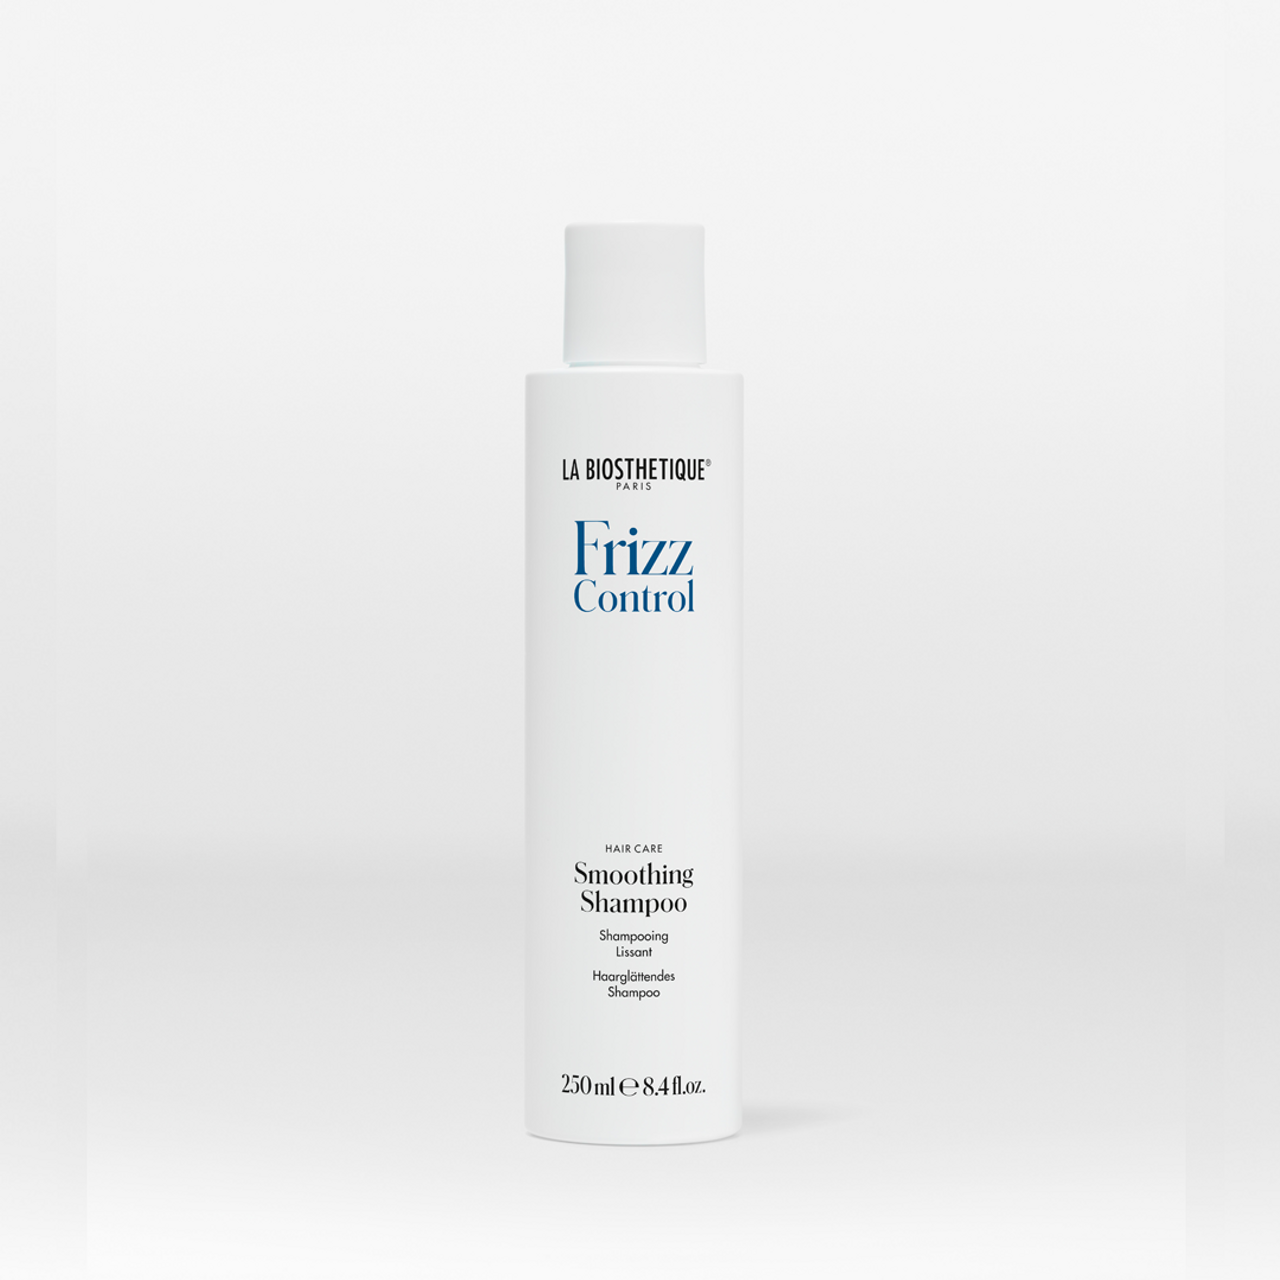 La Biosthetique's Frizz Control Smoothing Shampoo